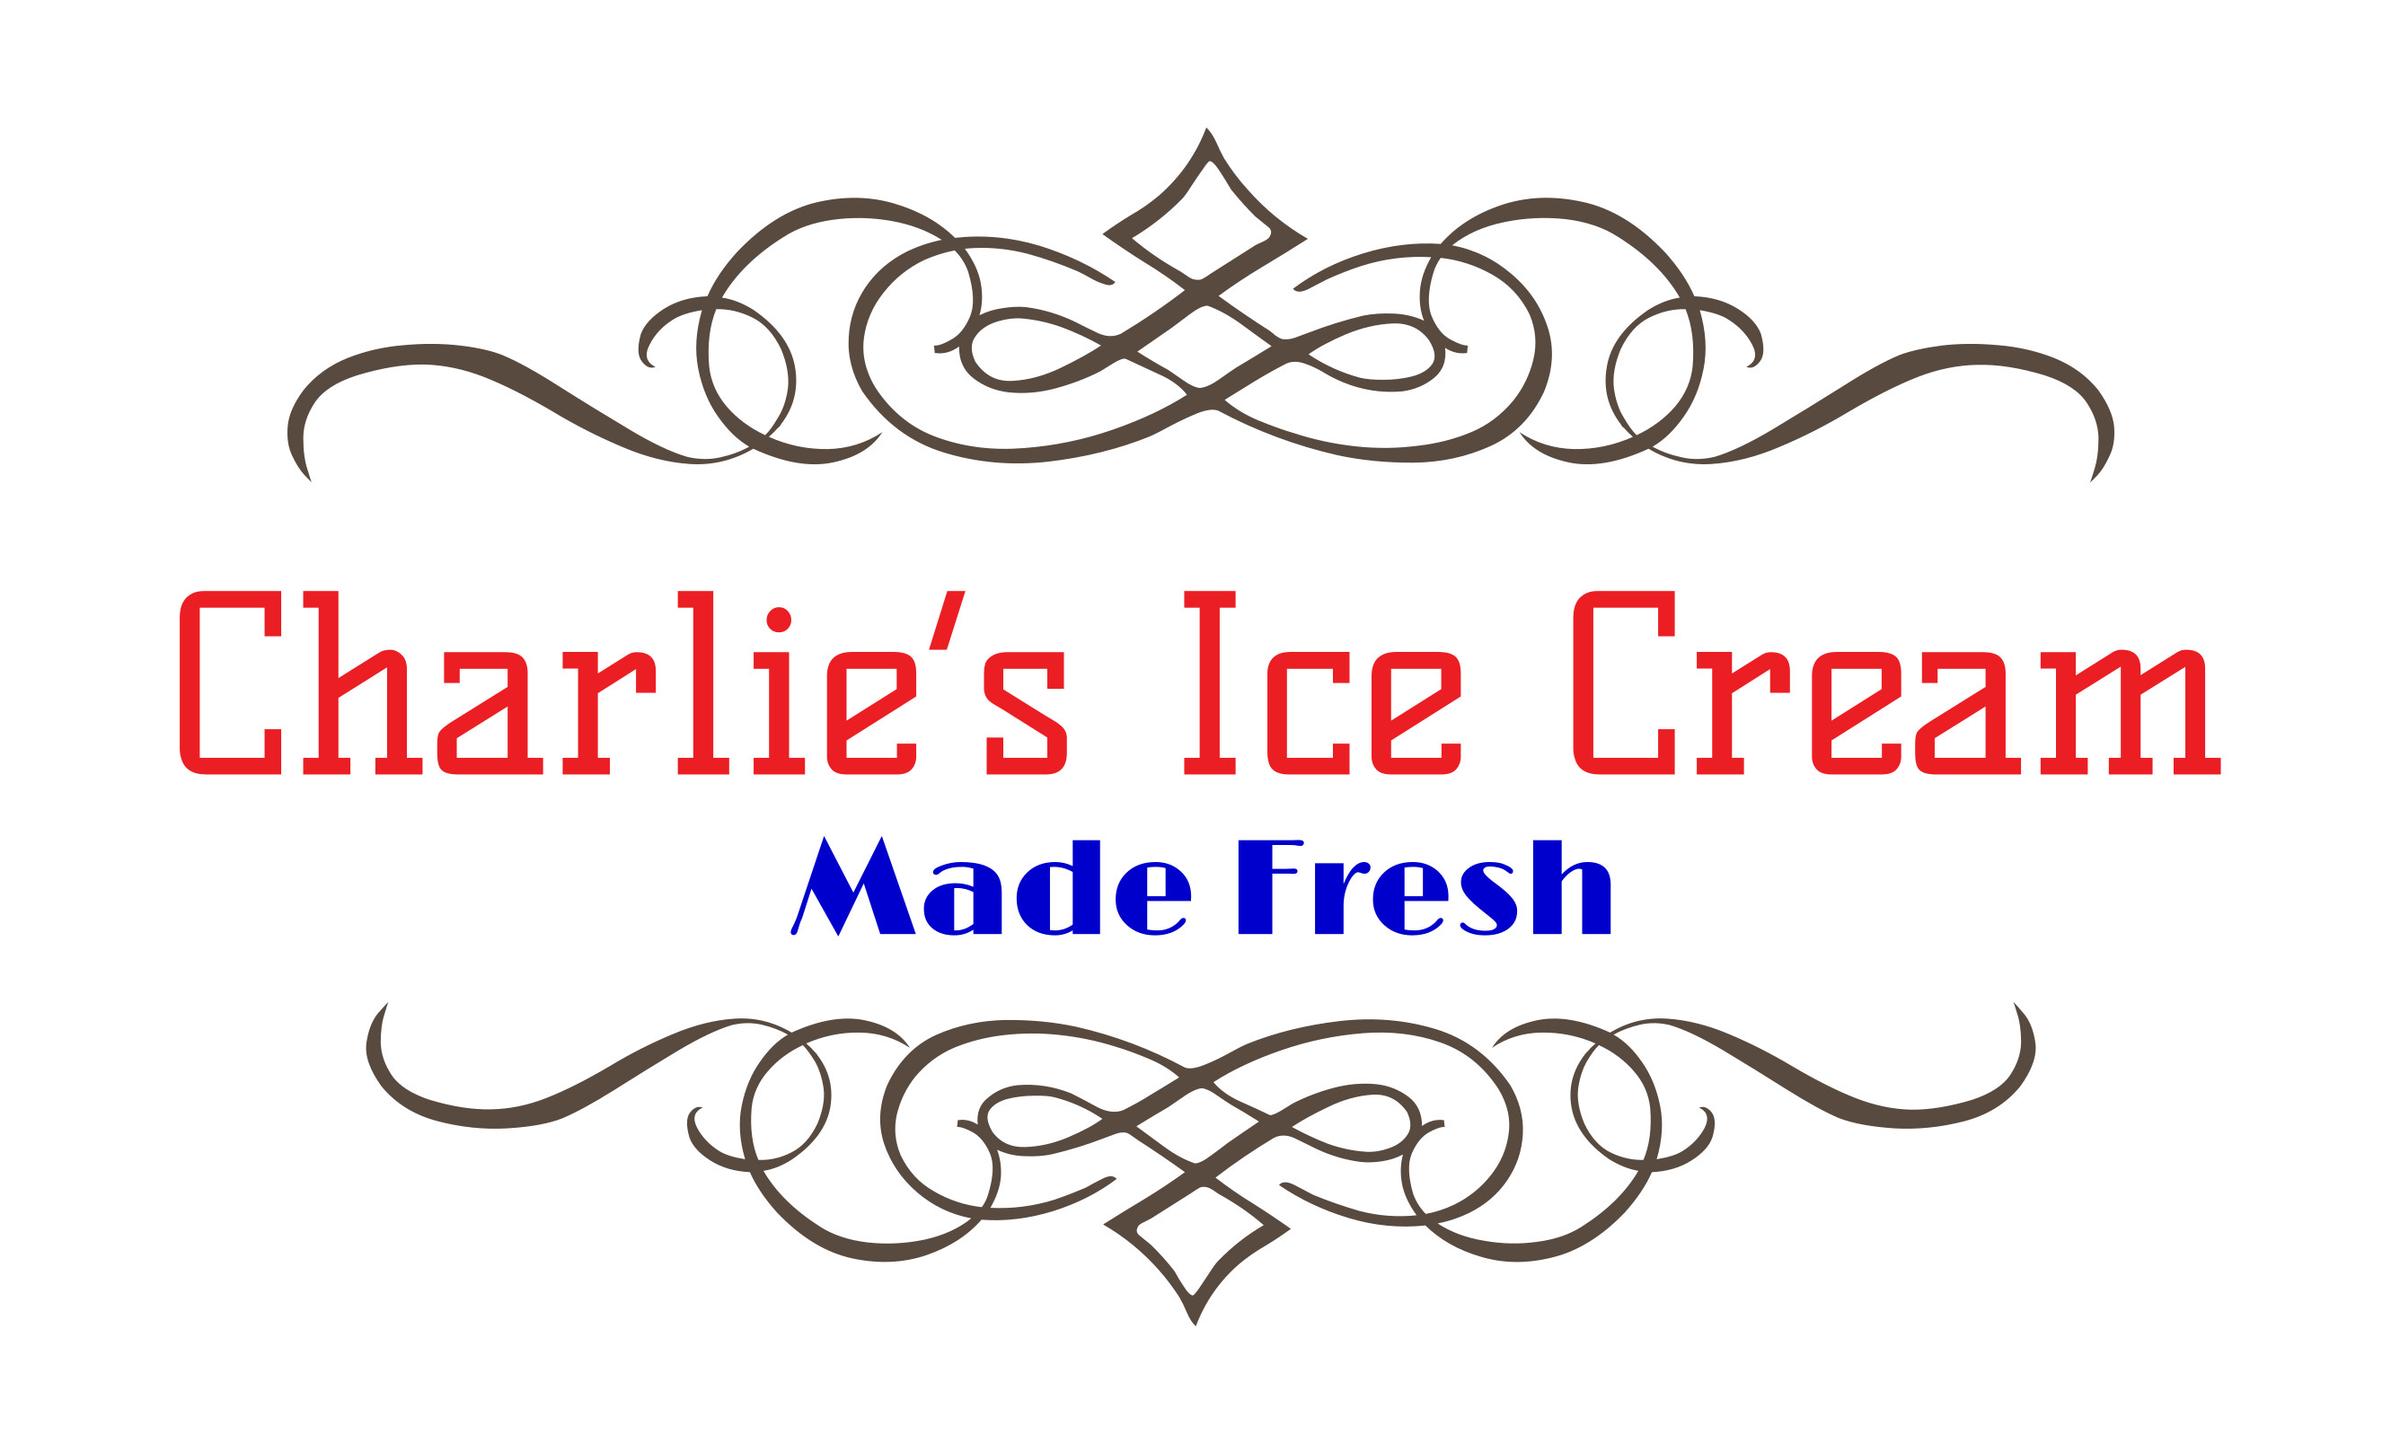 Pet Friendly Charlie's Ice Cream